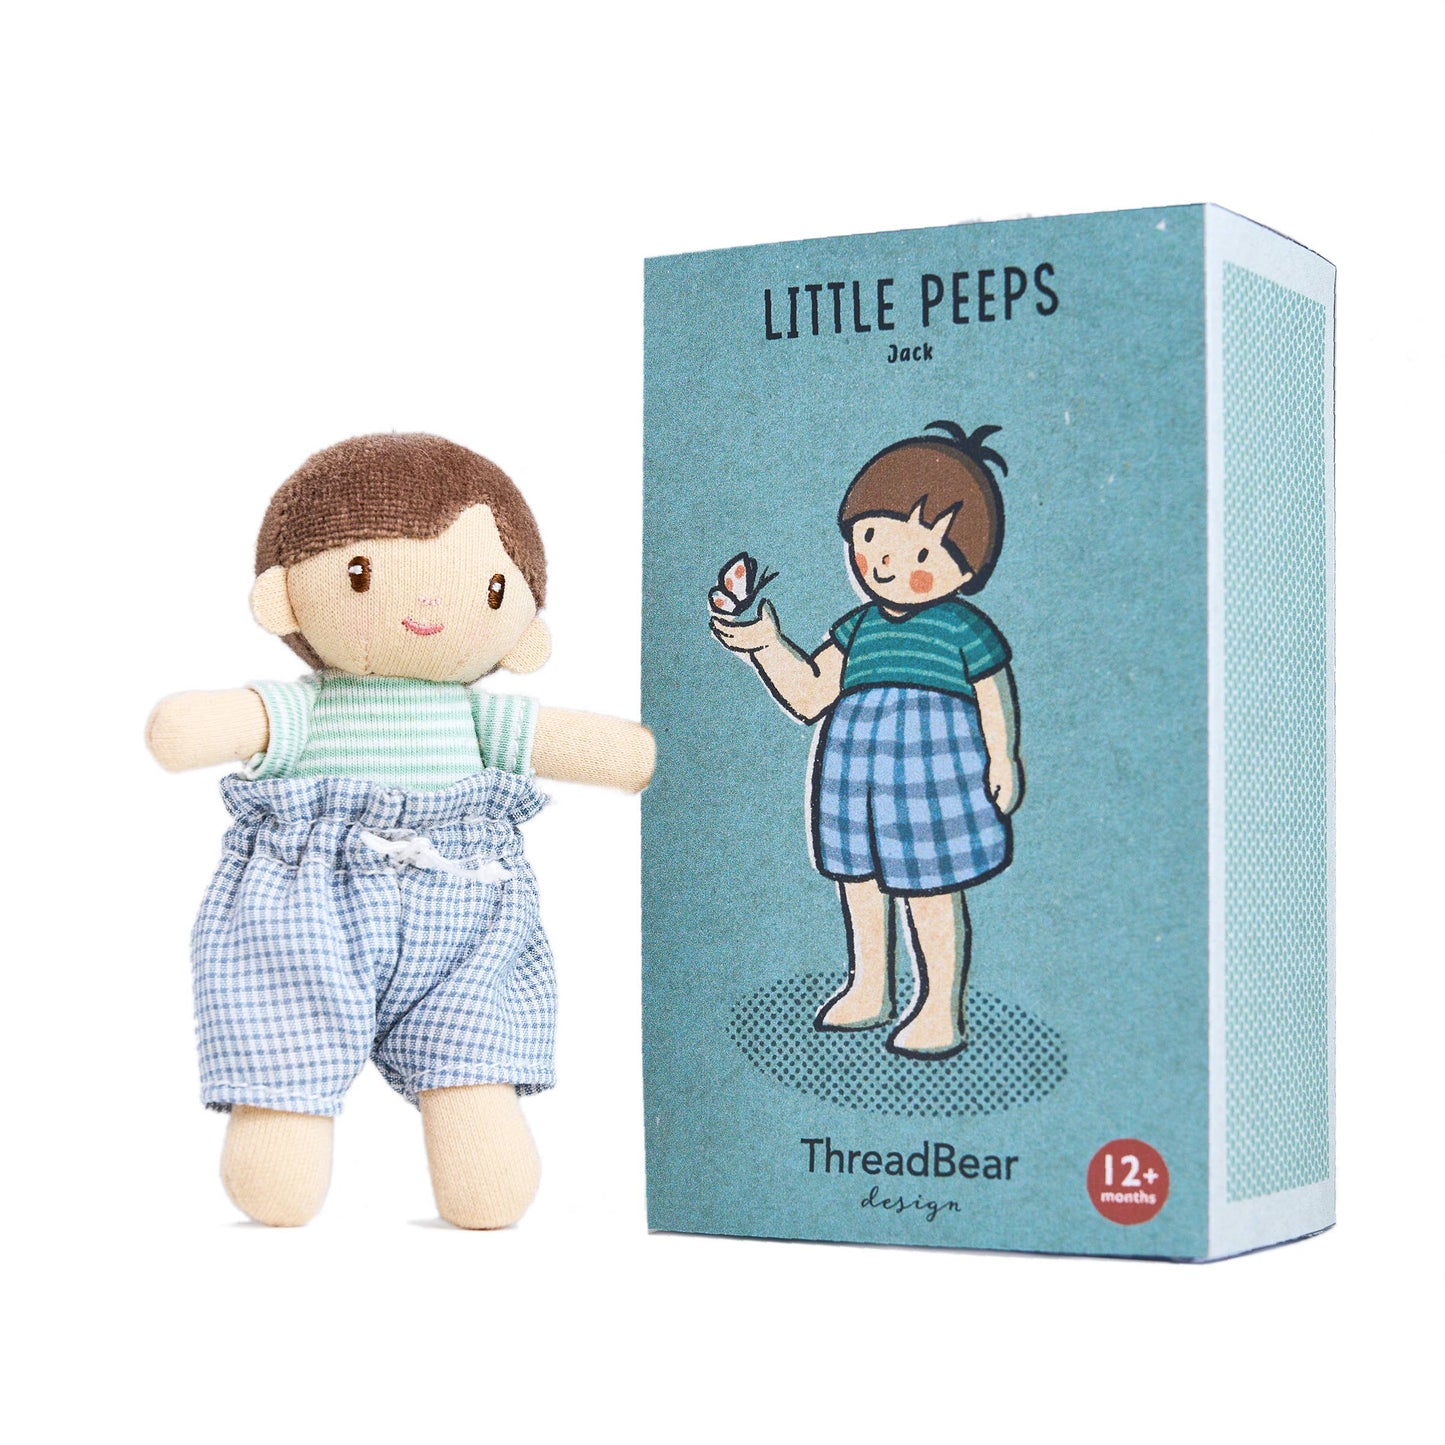 ThreadBear Design Ltd - Little Peeps Jack Doll